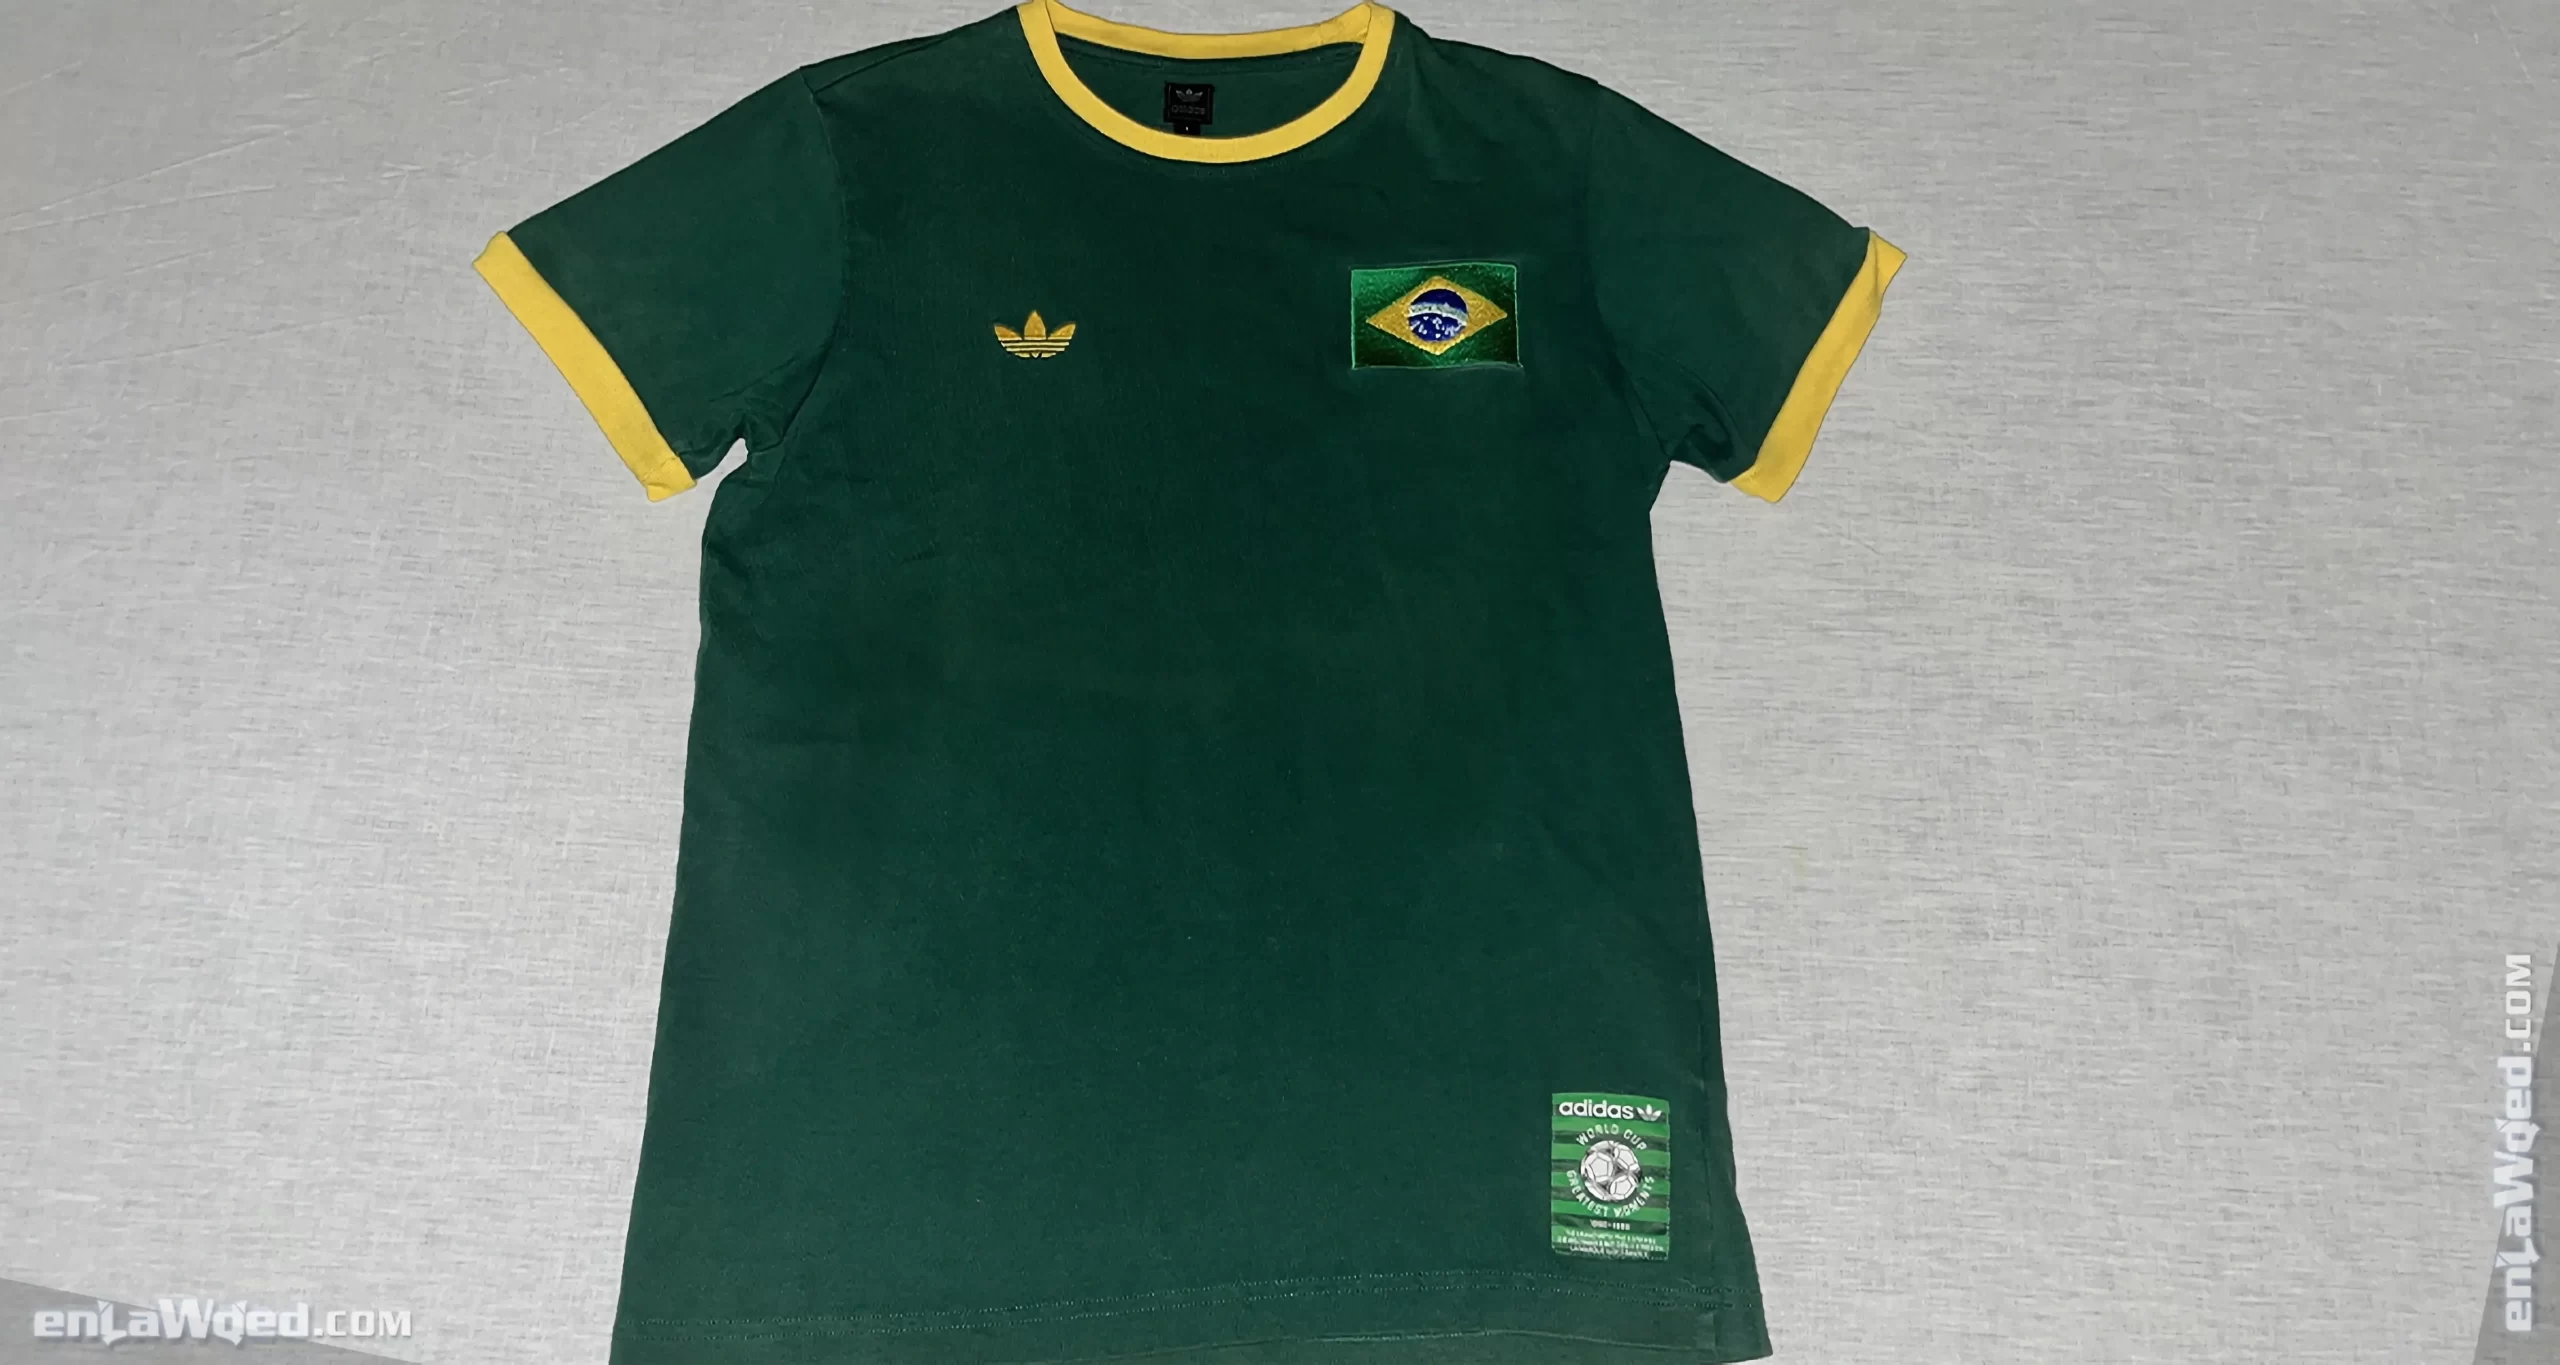 Men’s 2006 Brasil ’70 Green T-Shirt by Adidas Originals: Direct (EnLawded.com file #lp1mebaf126149qxxh2lyykif)